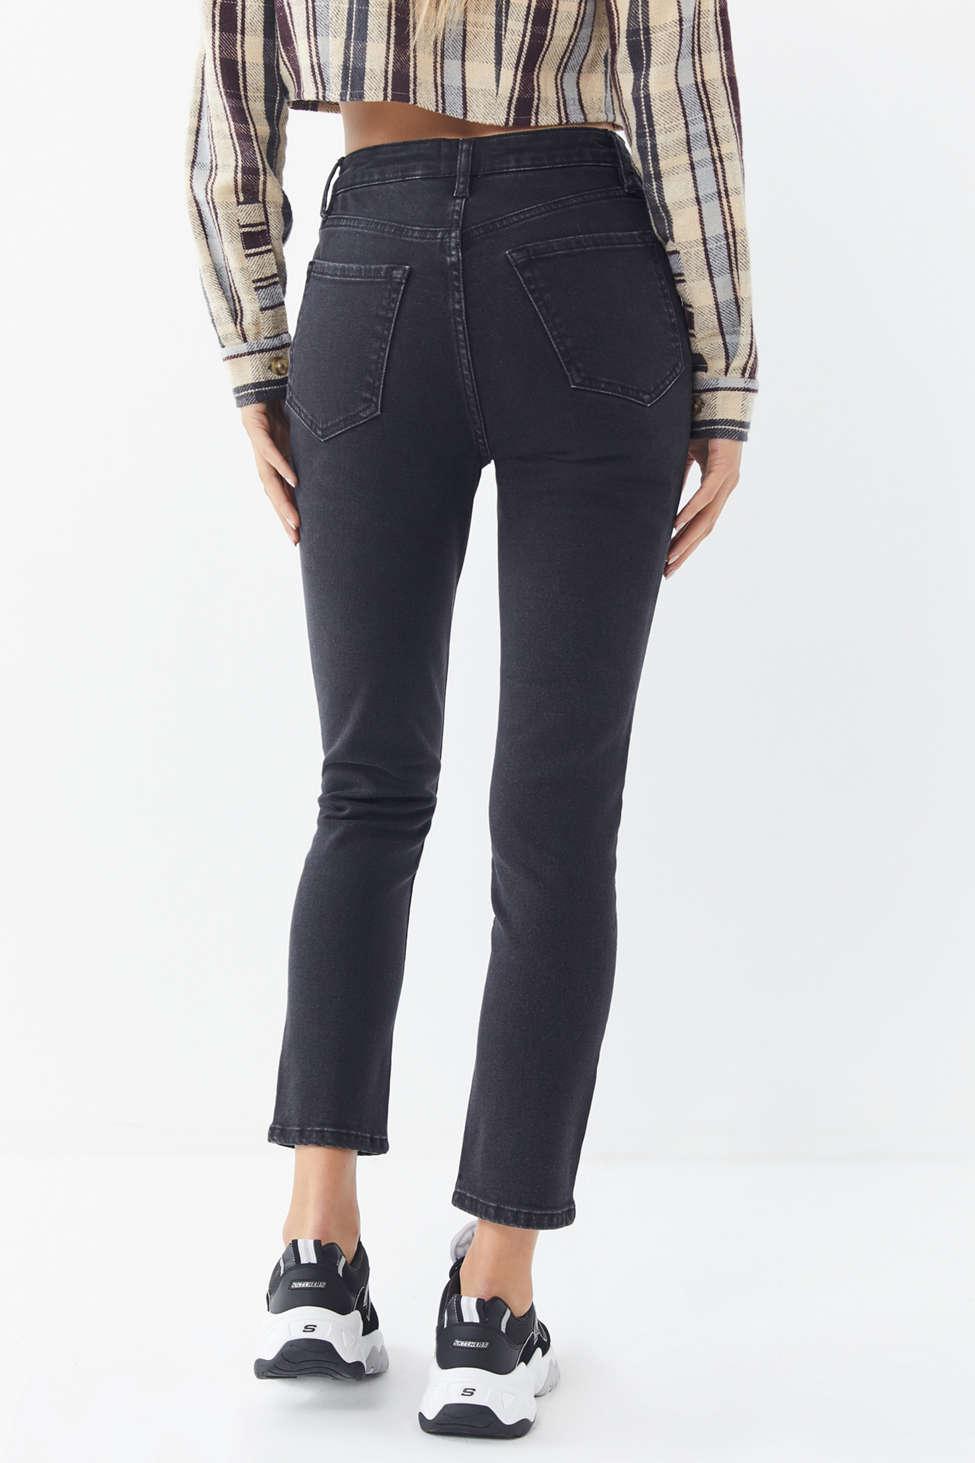 BDG Urban Outfitter Girlfriend High Rise Louis Vuitton Back Pocket Jeans Sz  26